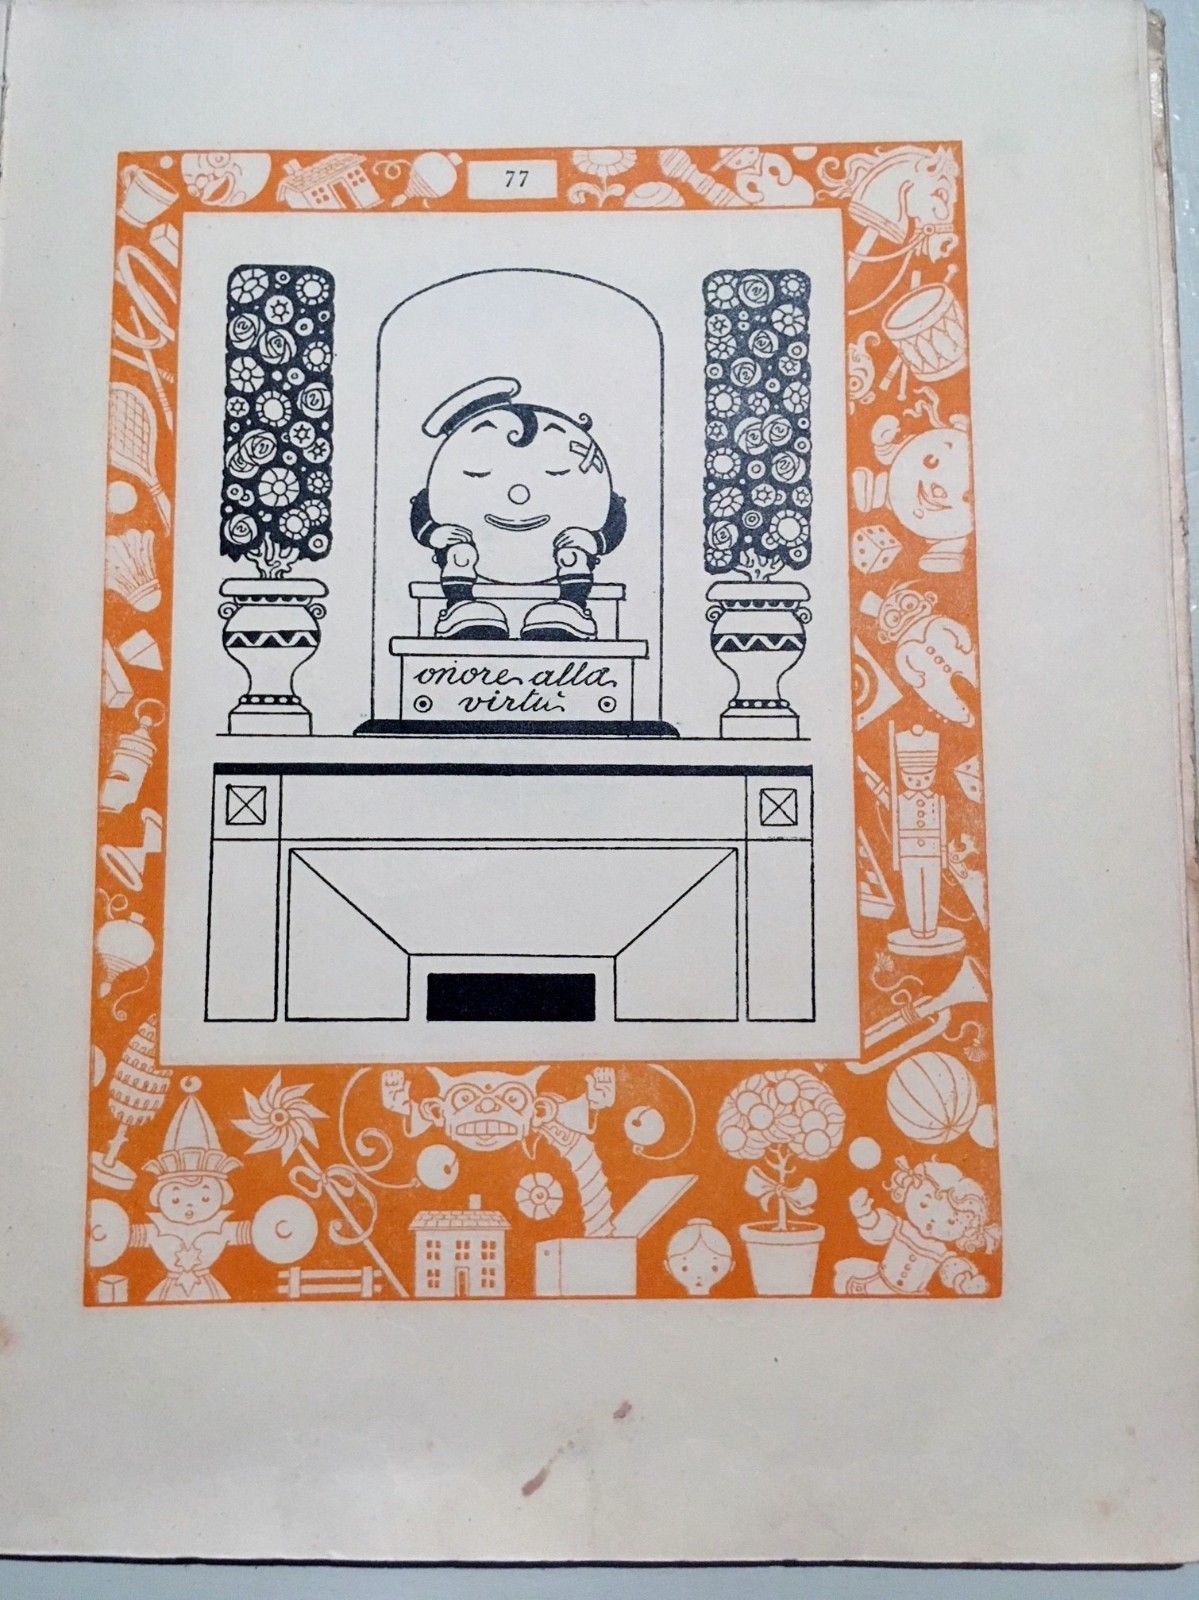 Rubino: I balocchi di Titina, 1912, pagine interne